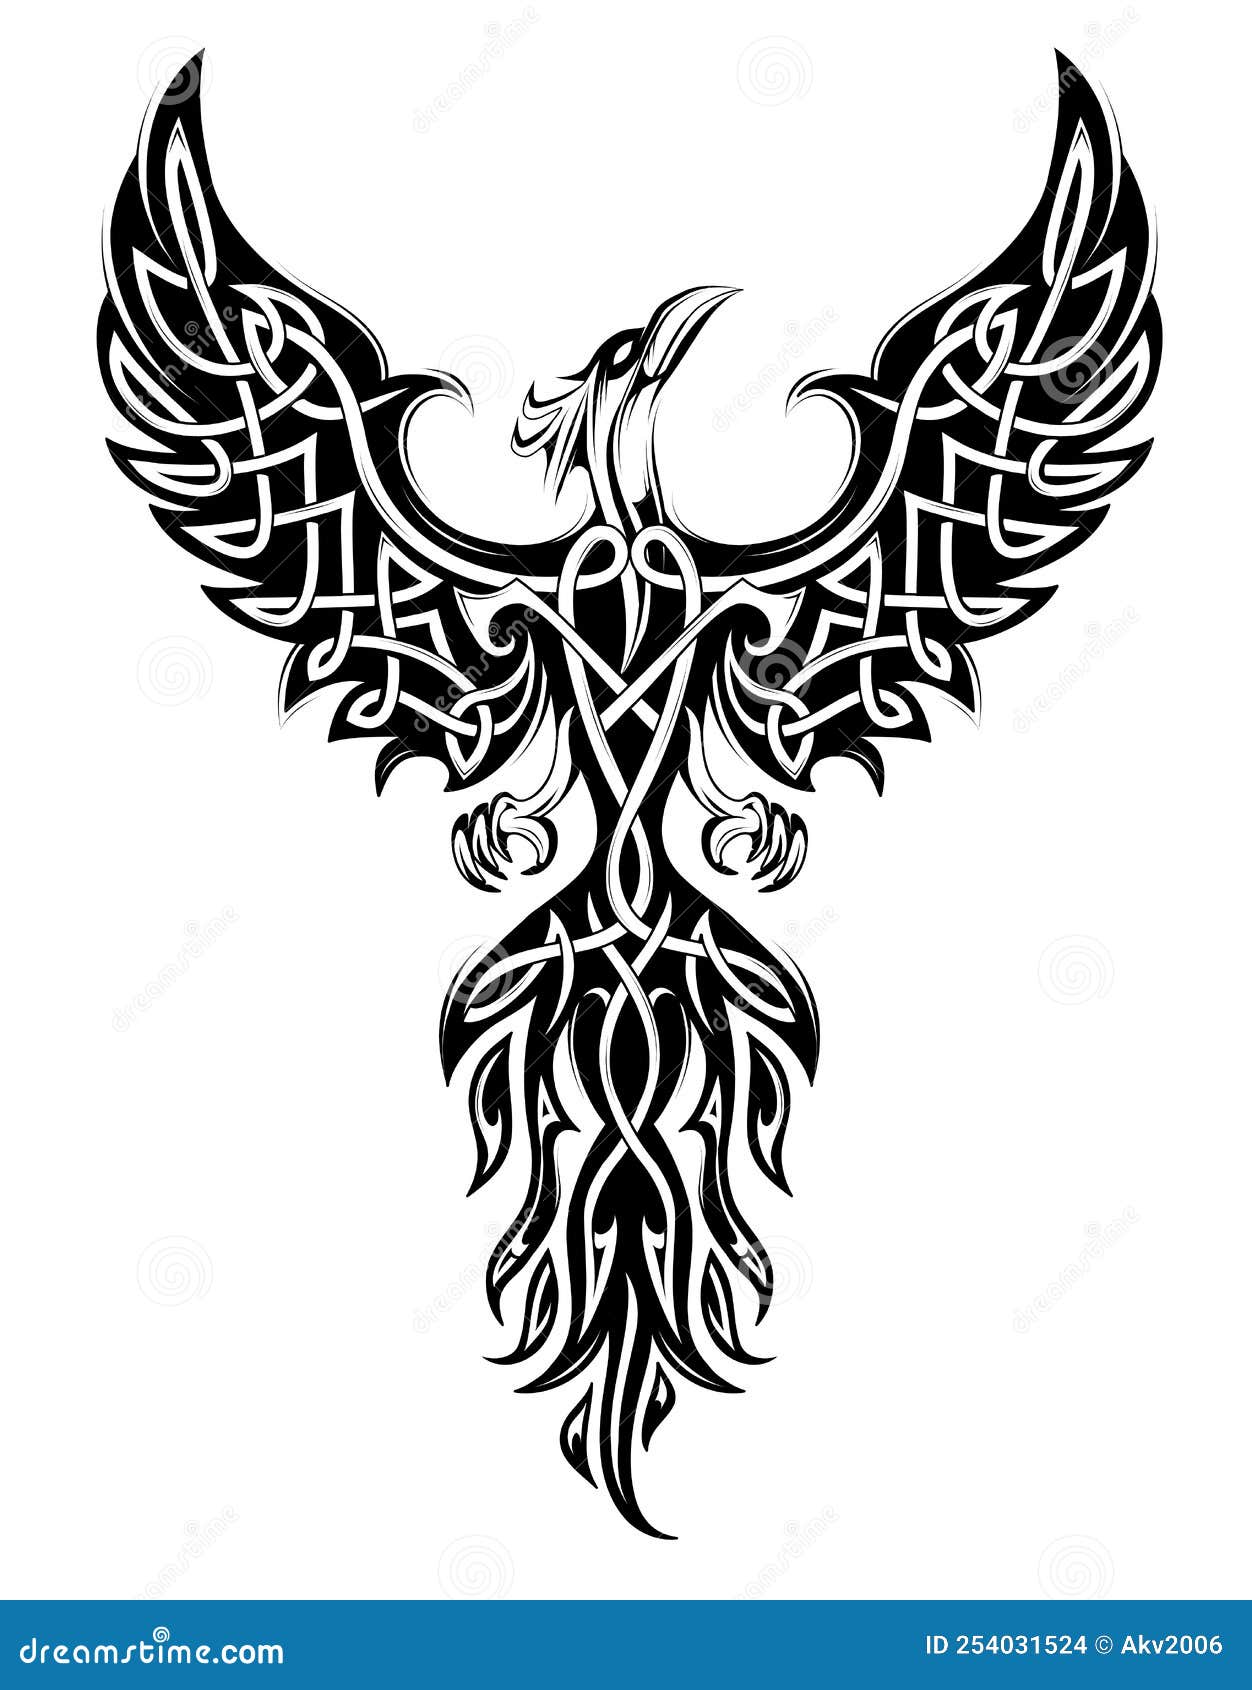 330 Tribal Phoenix Tattoo Designs Illustrations RoyaltyFree Vector  Graphics  Clip Art  iStock